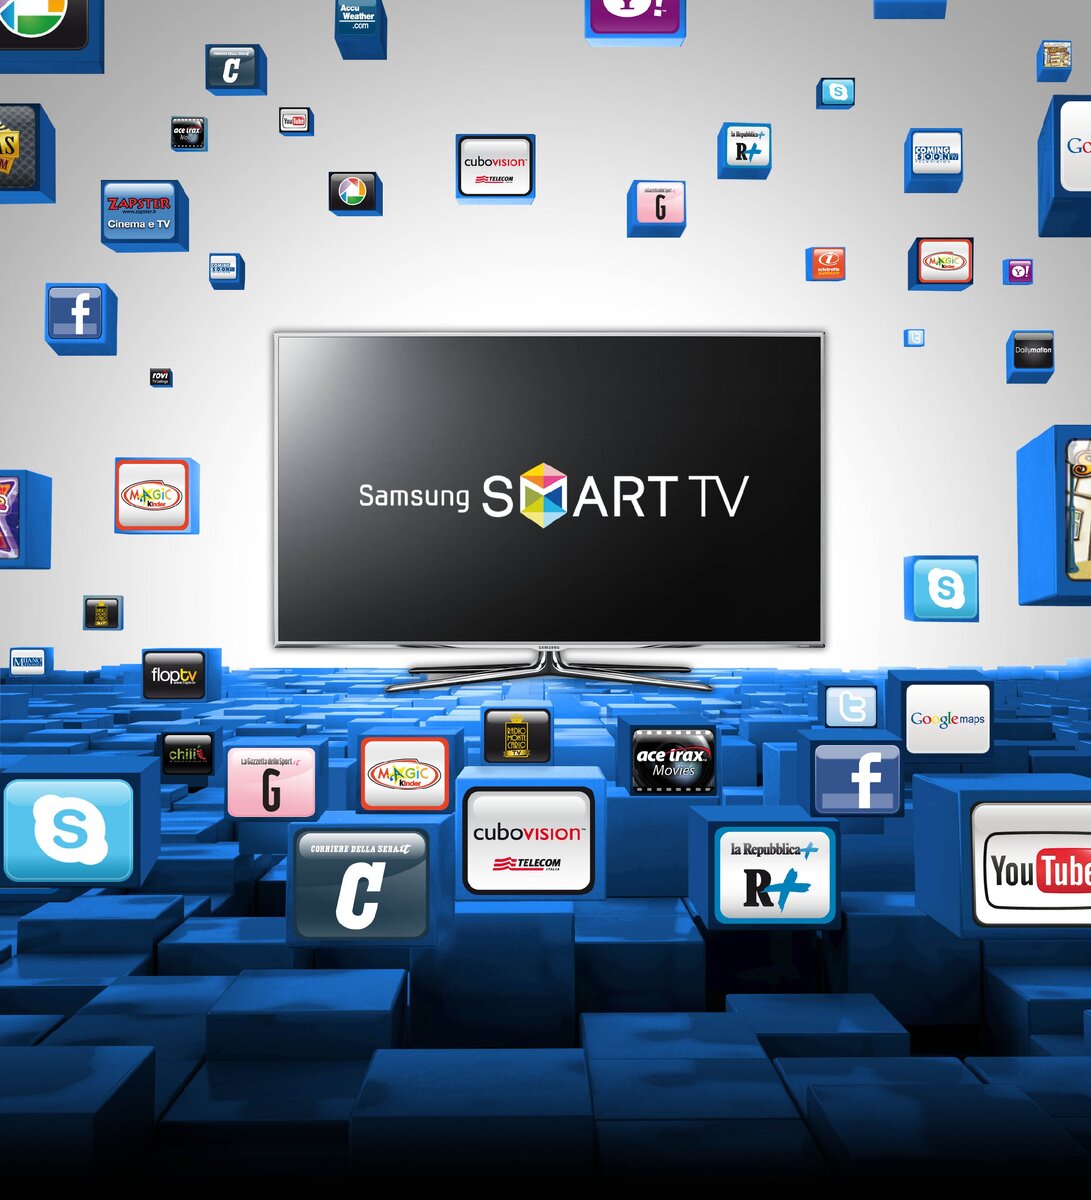 Samsung Smart TV. Телевизор самсунг смарт ТВ. Версия самсунг смарт ТВ 1150. Смарт ТВ телевизор с интернетом. Какой телевизор со смарт тв лучший